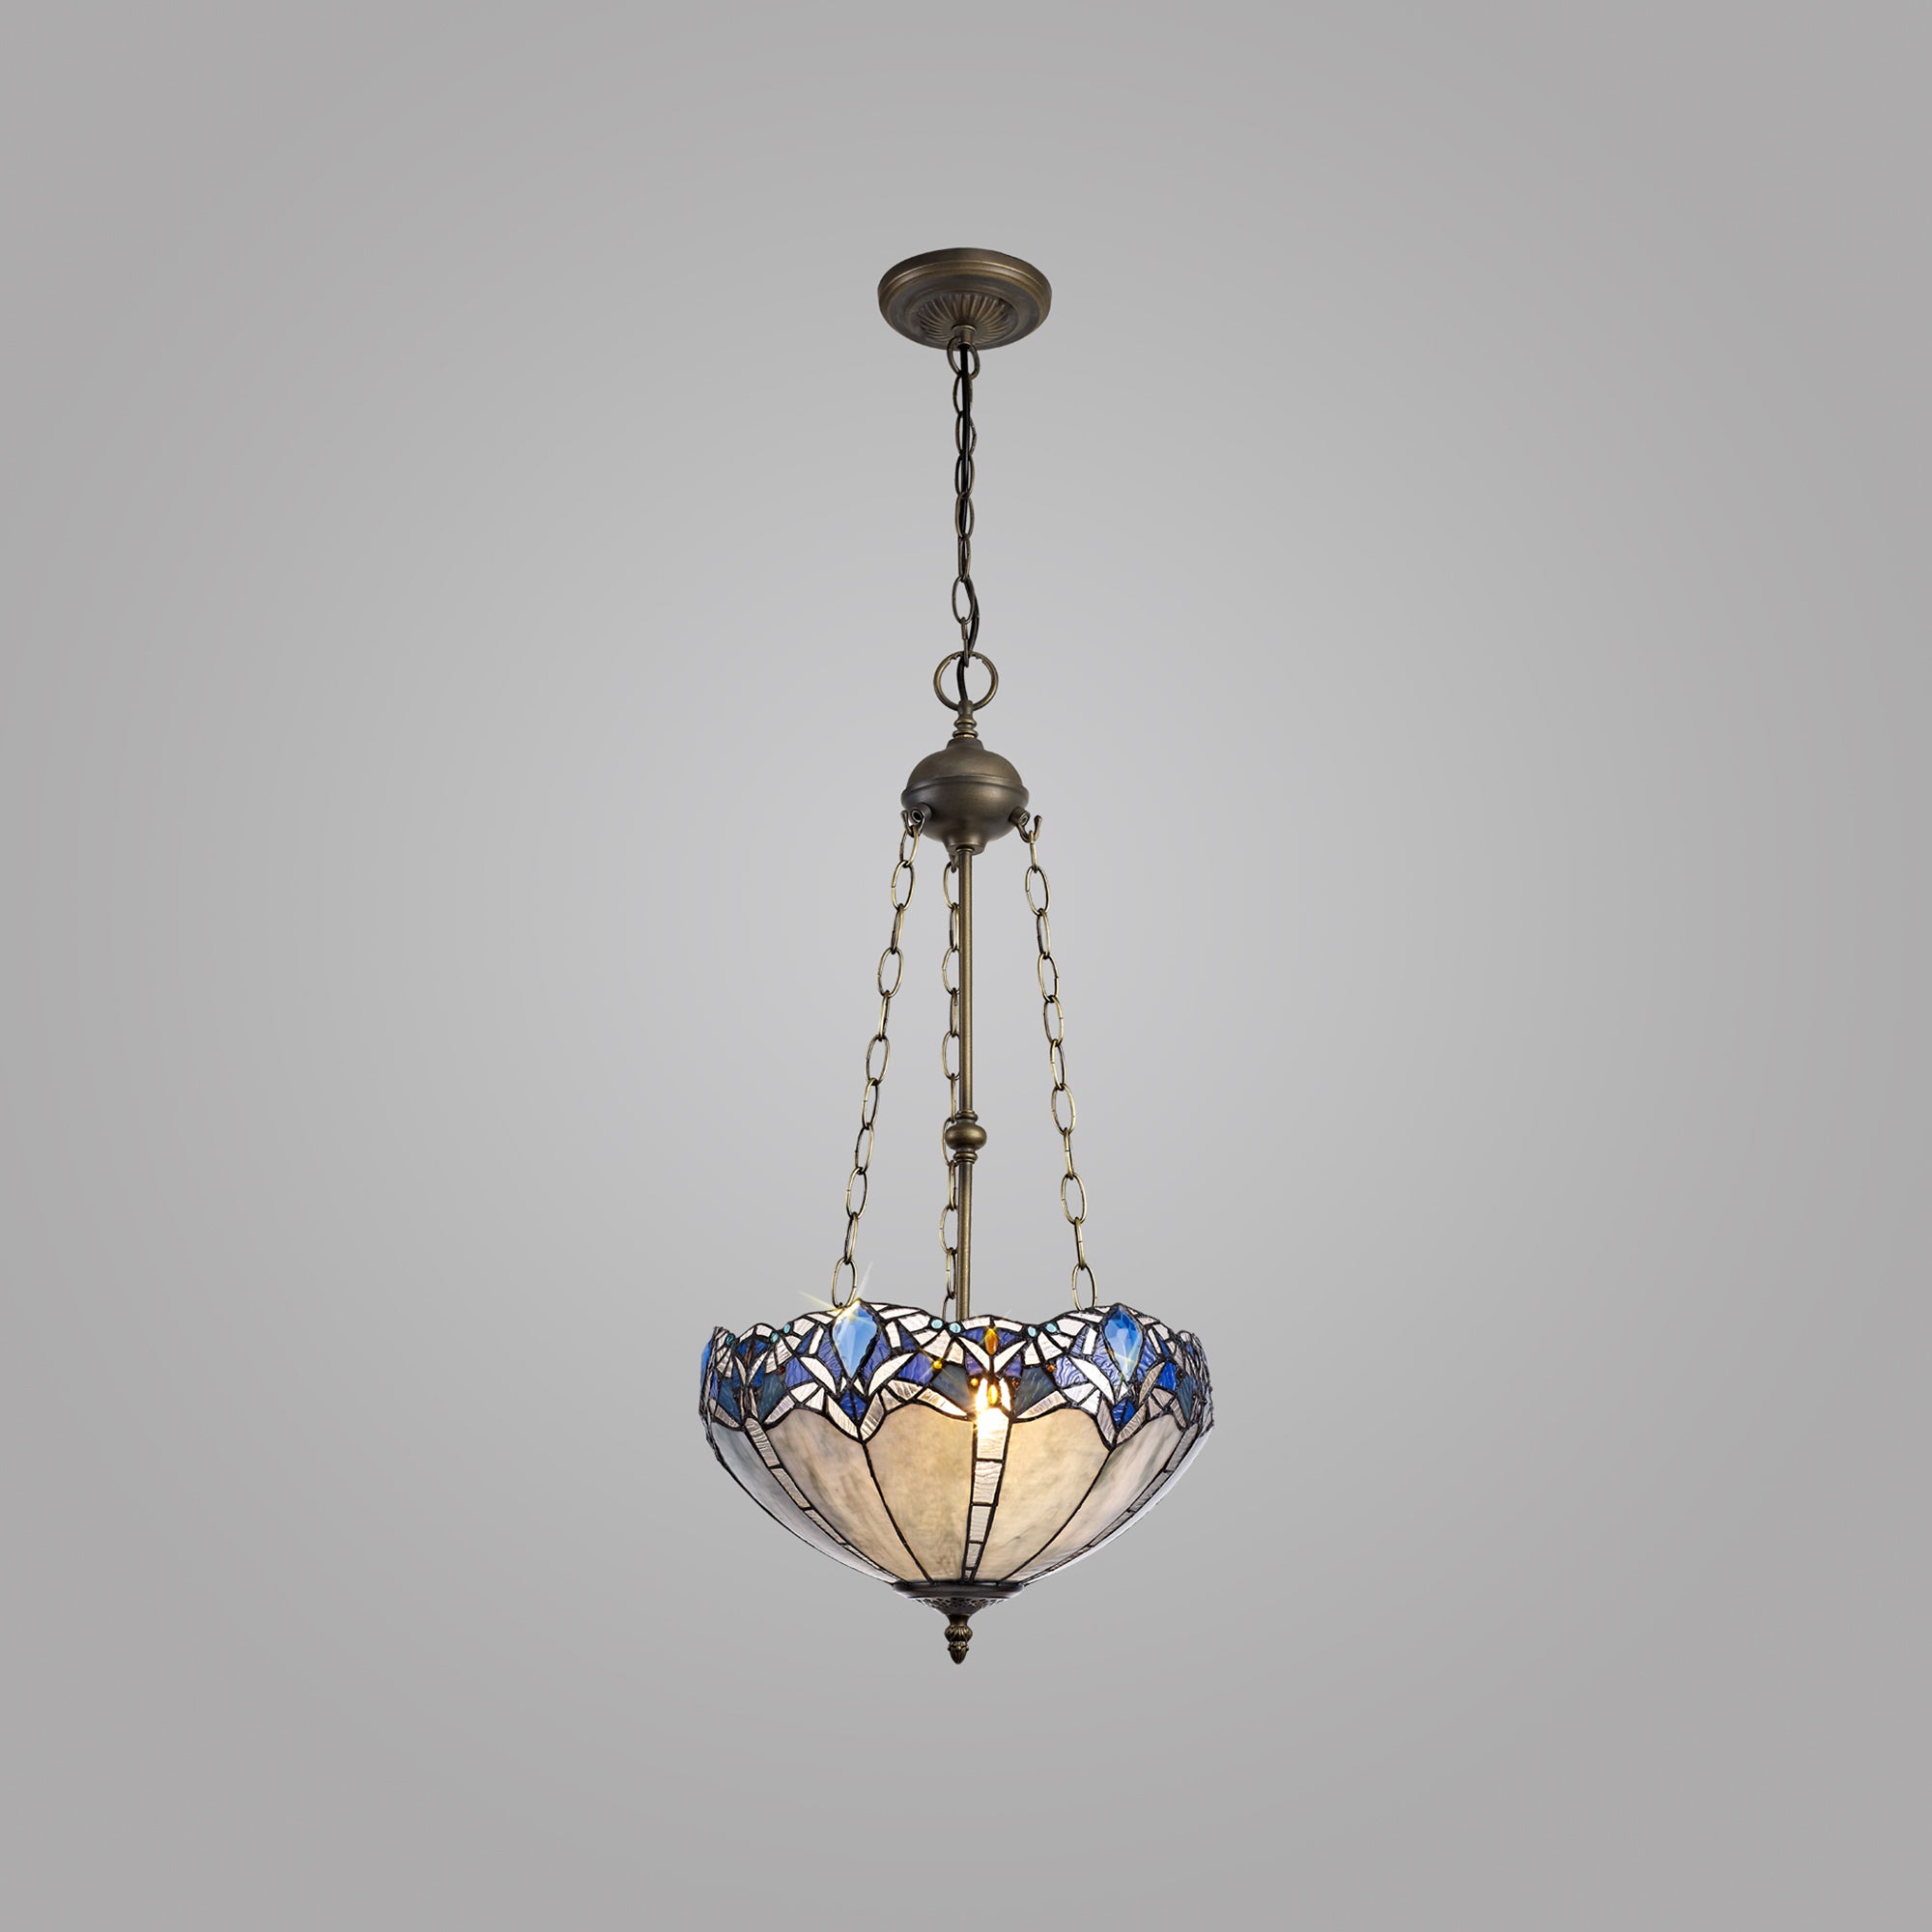 Oksana 2/3 Light Medium/Large Uplighter Centre Ceiling Light E27 With 30cm Tiffany Shade, Blue & Clear Crystal & Aged Antique Brass